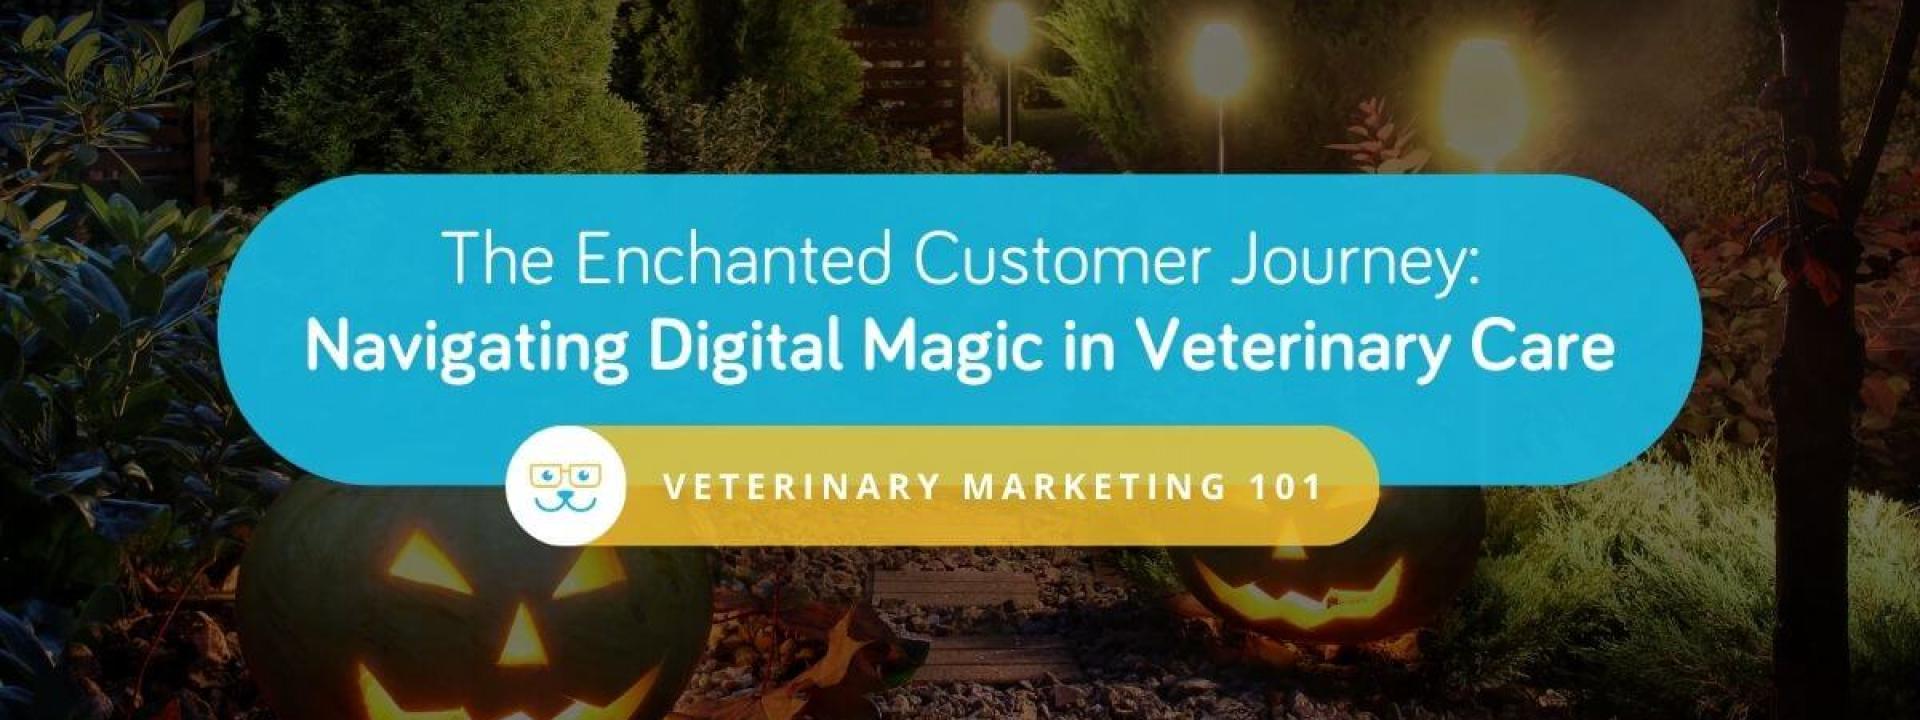 The Enchanted Customer Journey: Navigating Digital Magic in Veterinary Care